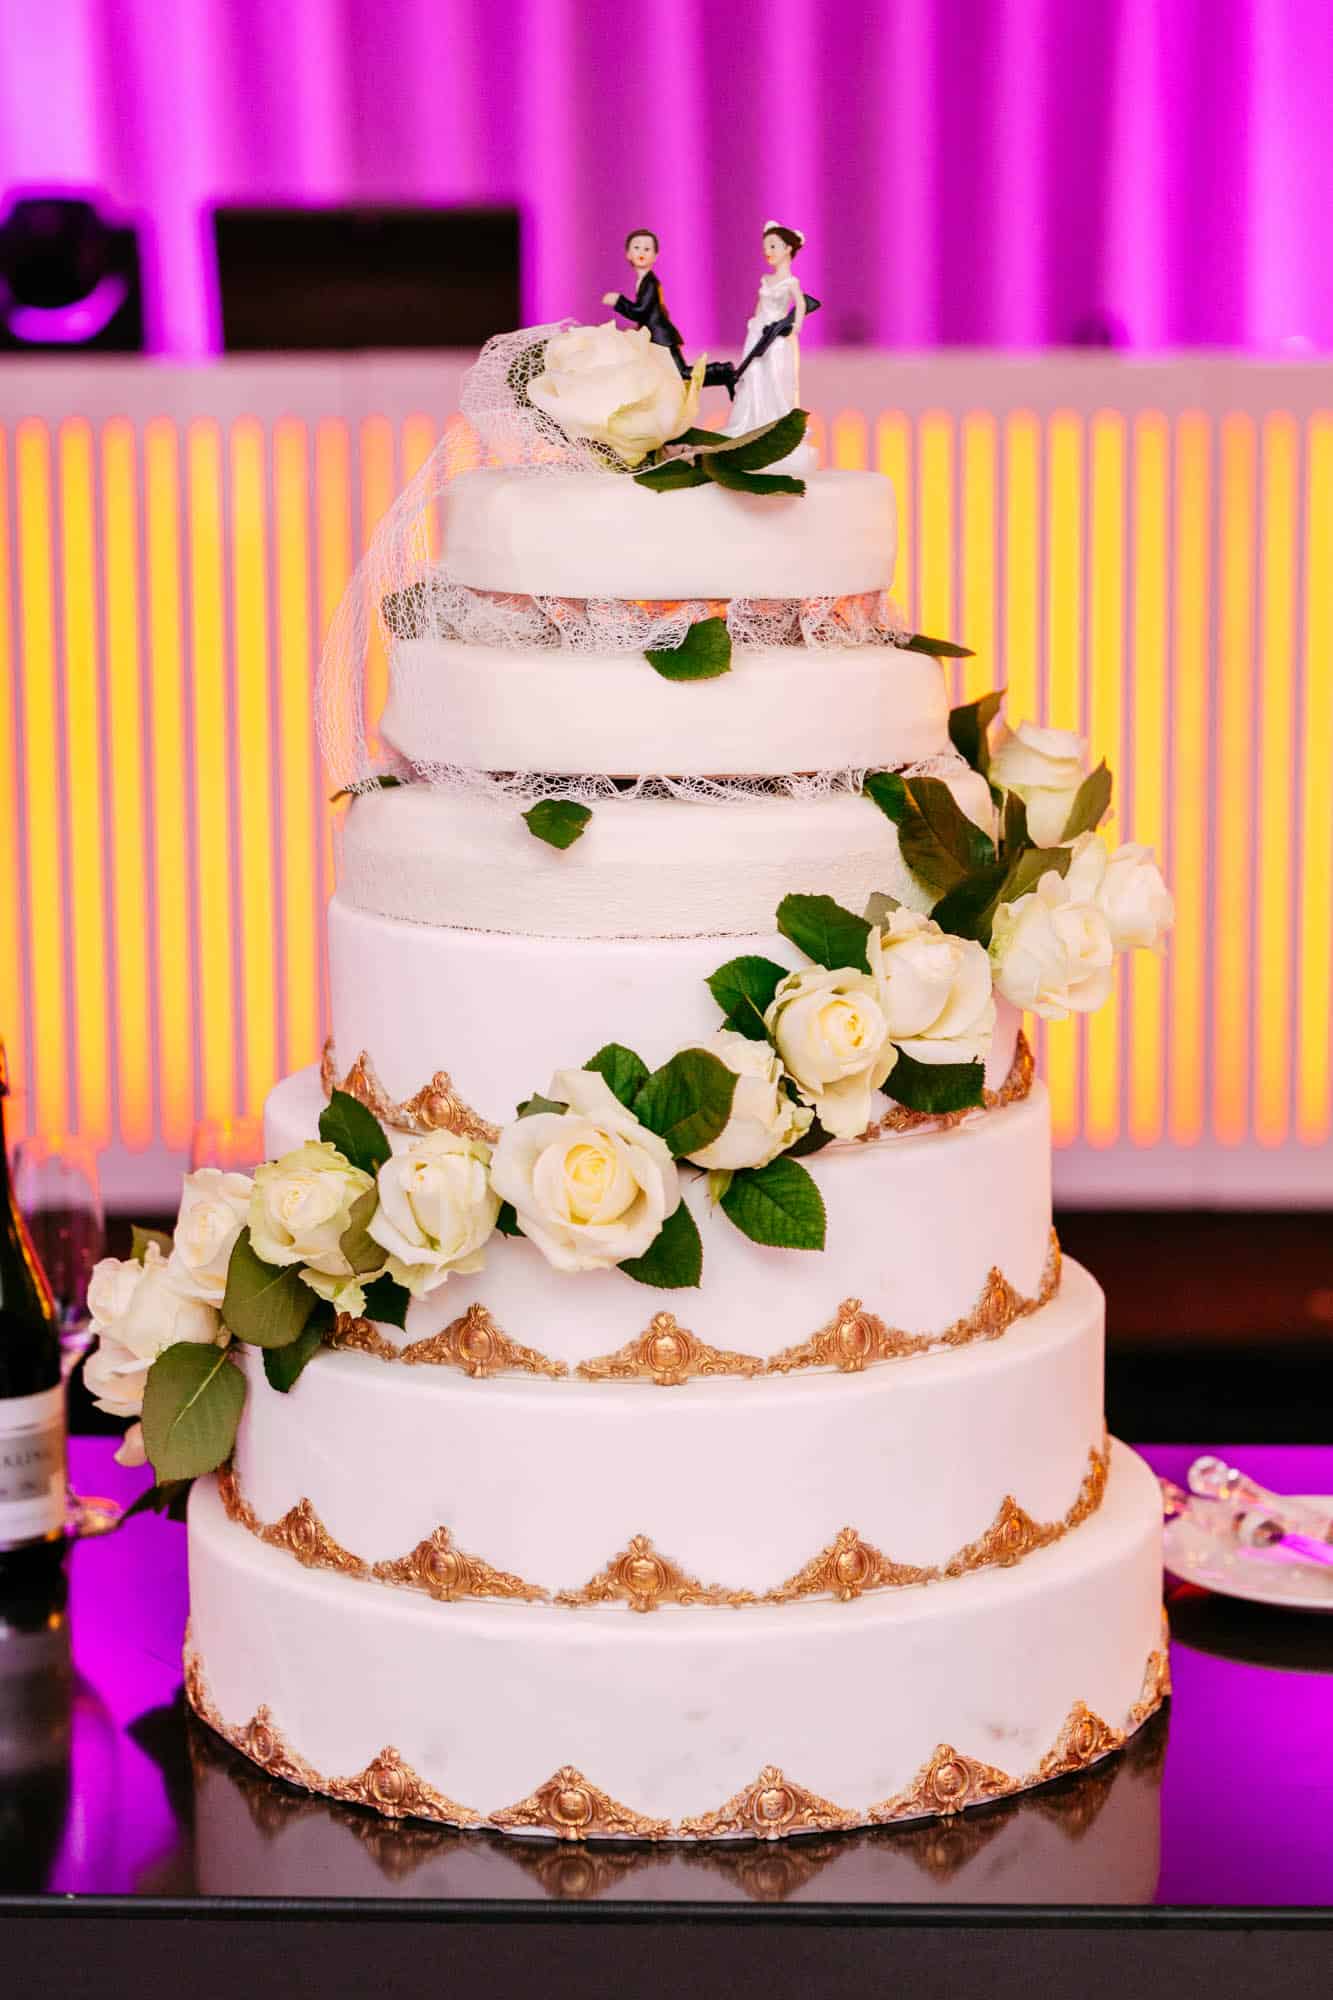 A wedding cake (wedding cake) on a table.